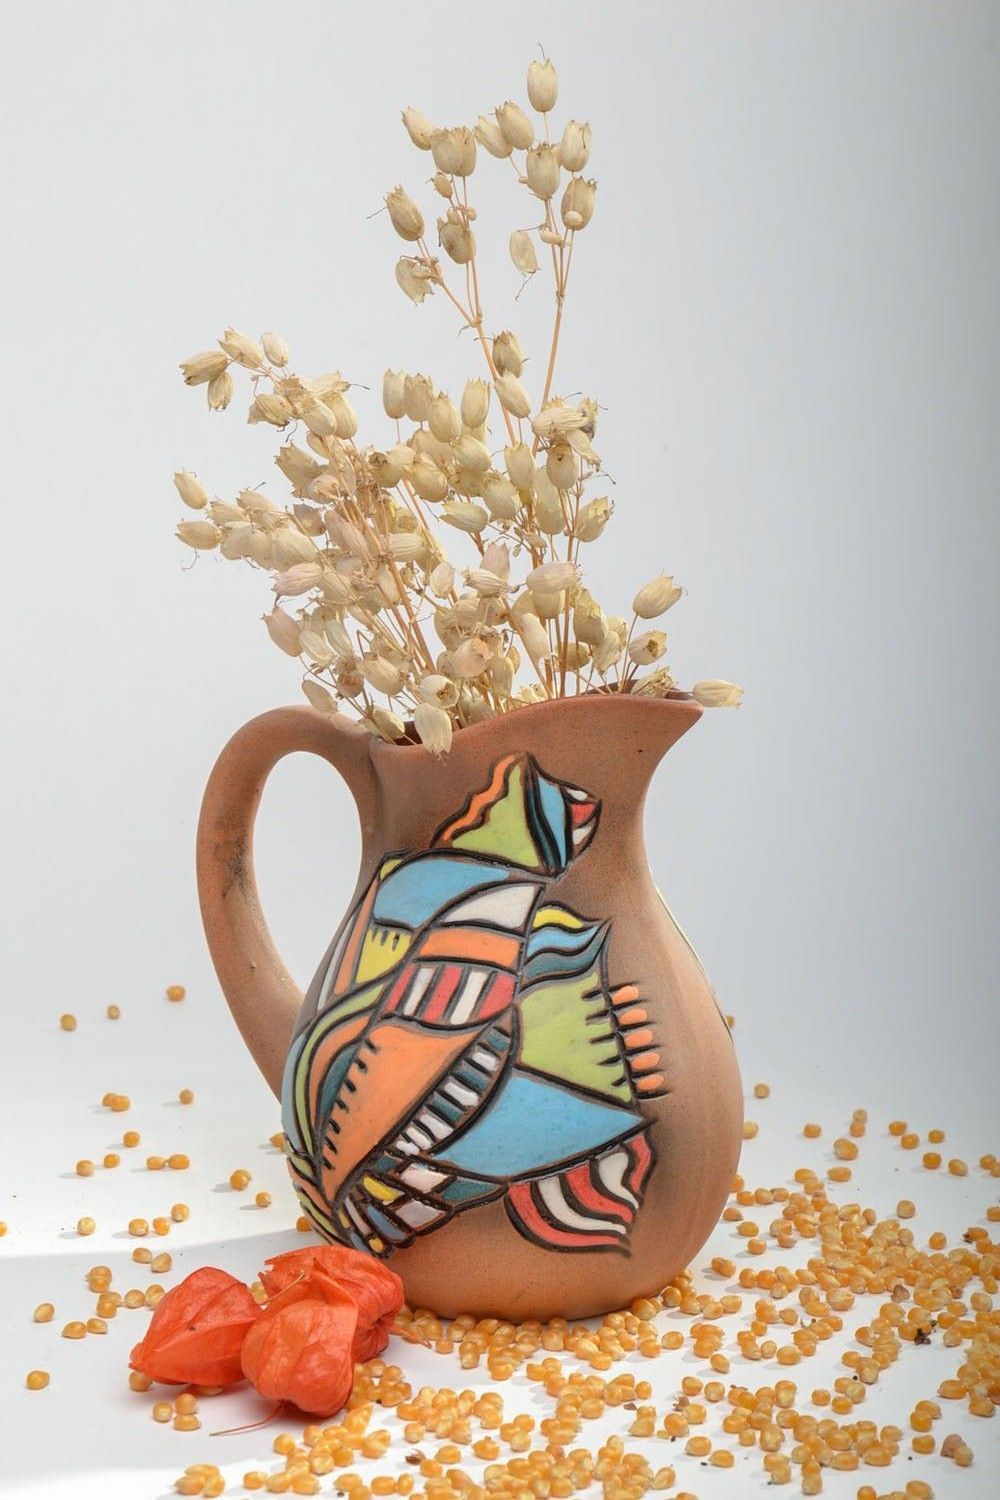 30 oz handmade ceramic classic style water pitcher 1,6 lb photo 1